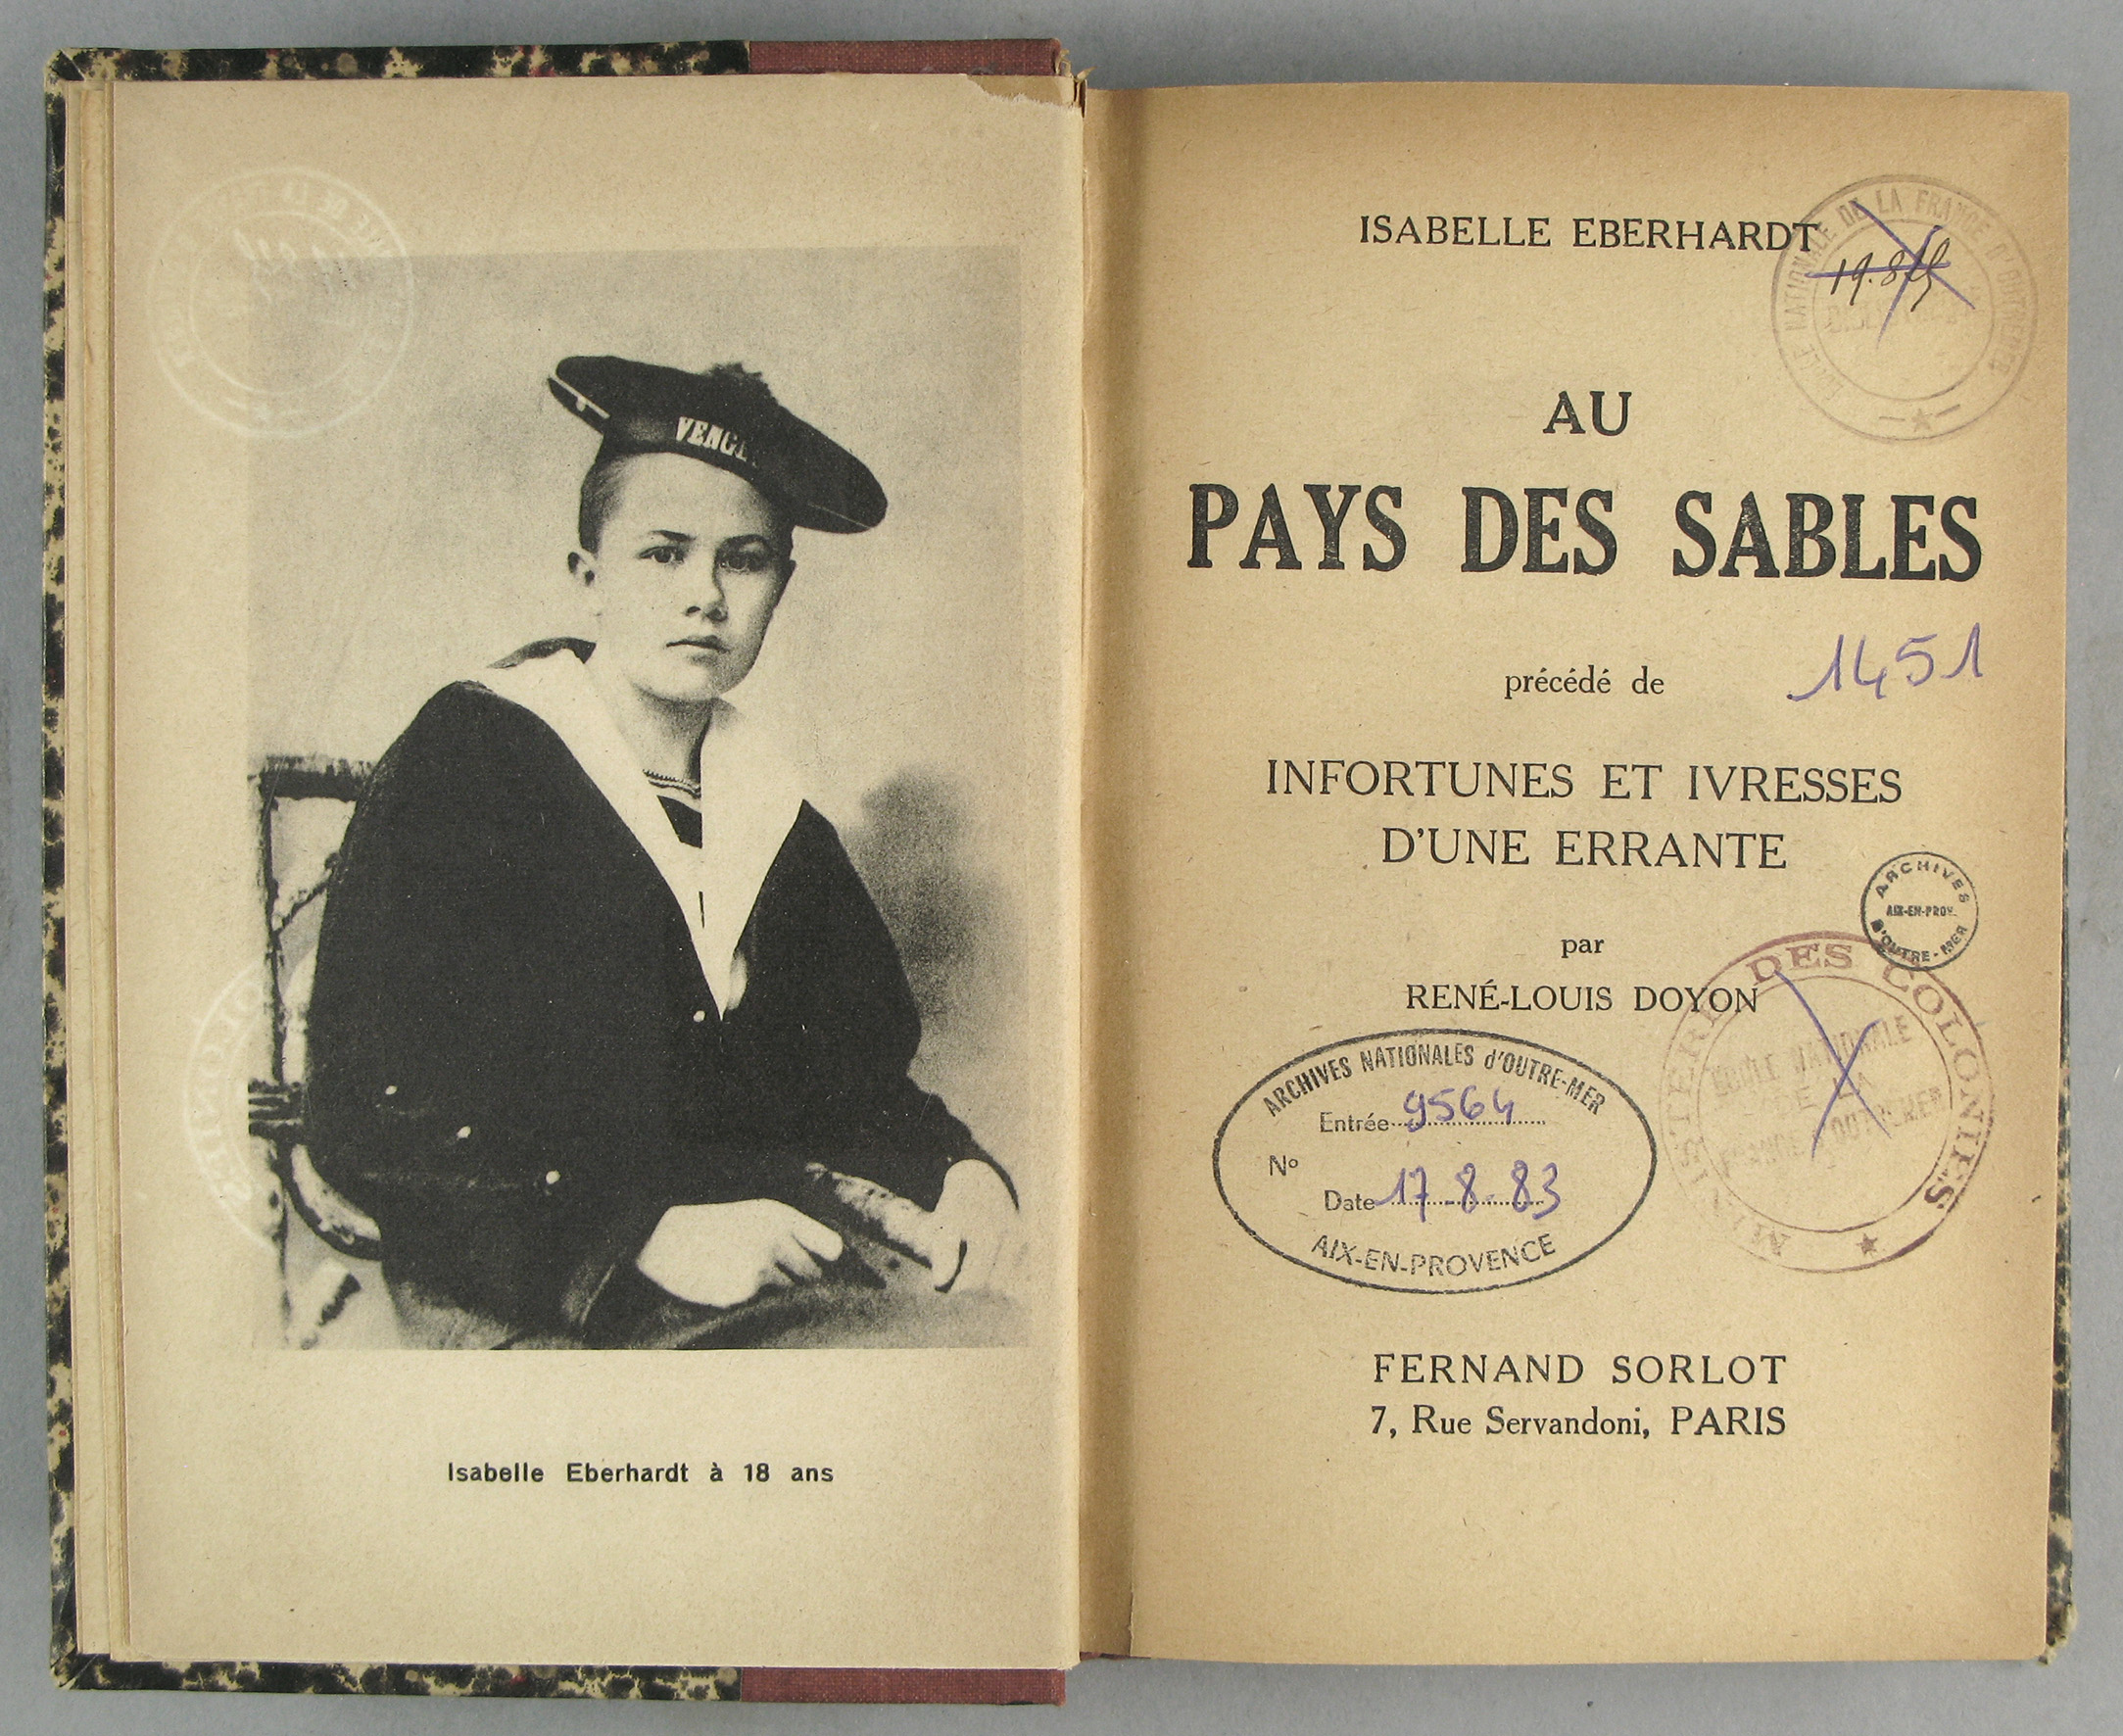 I. Eberhardt, Au pays des sables, Paris, F. Sorlot, 1944 - BIB AOM 1451